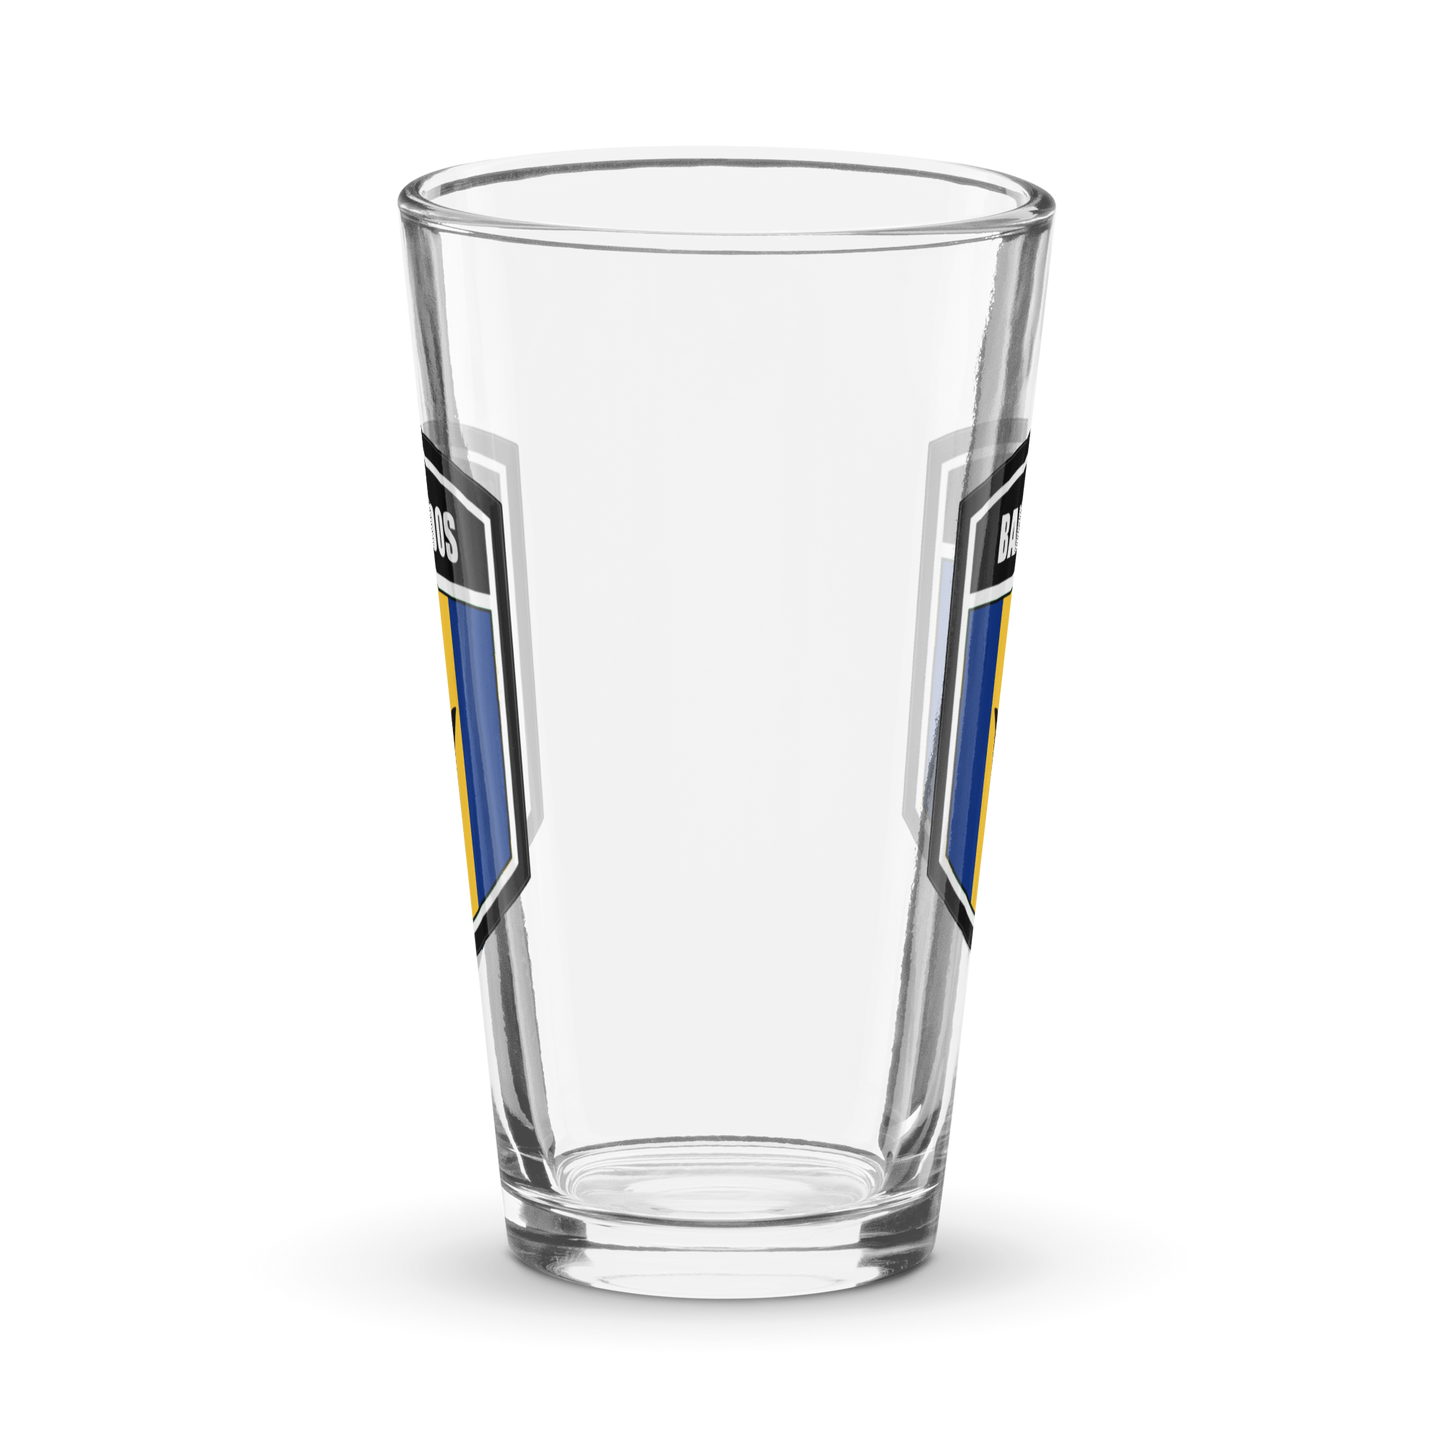 Barbados Shaker pint glass